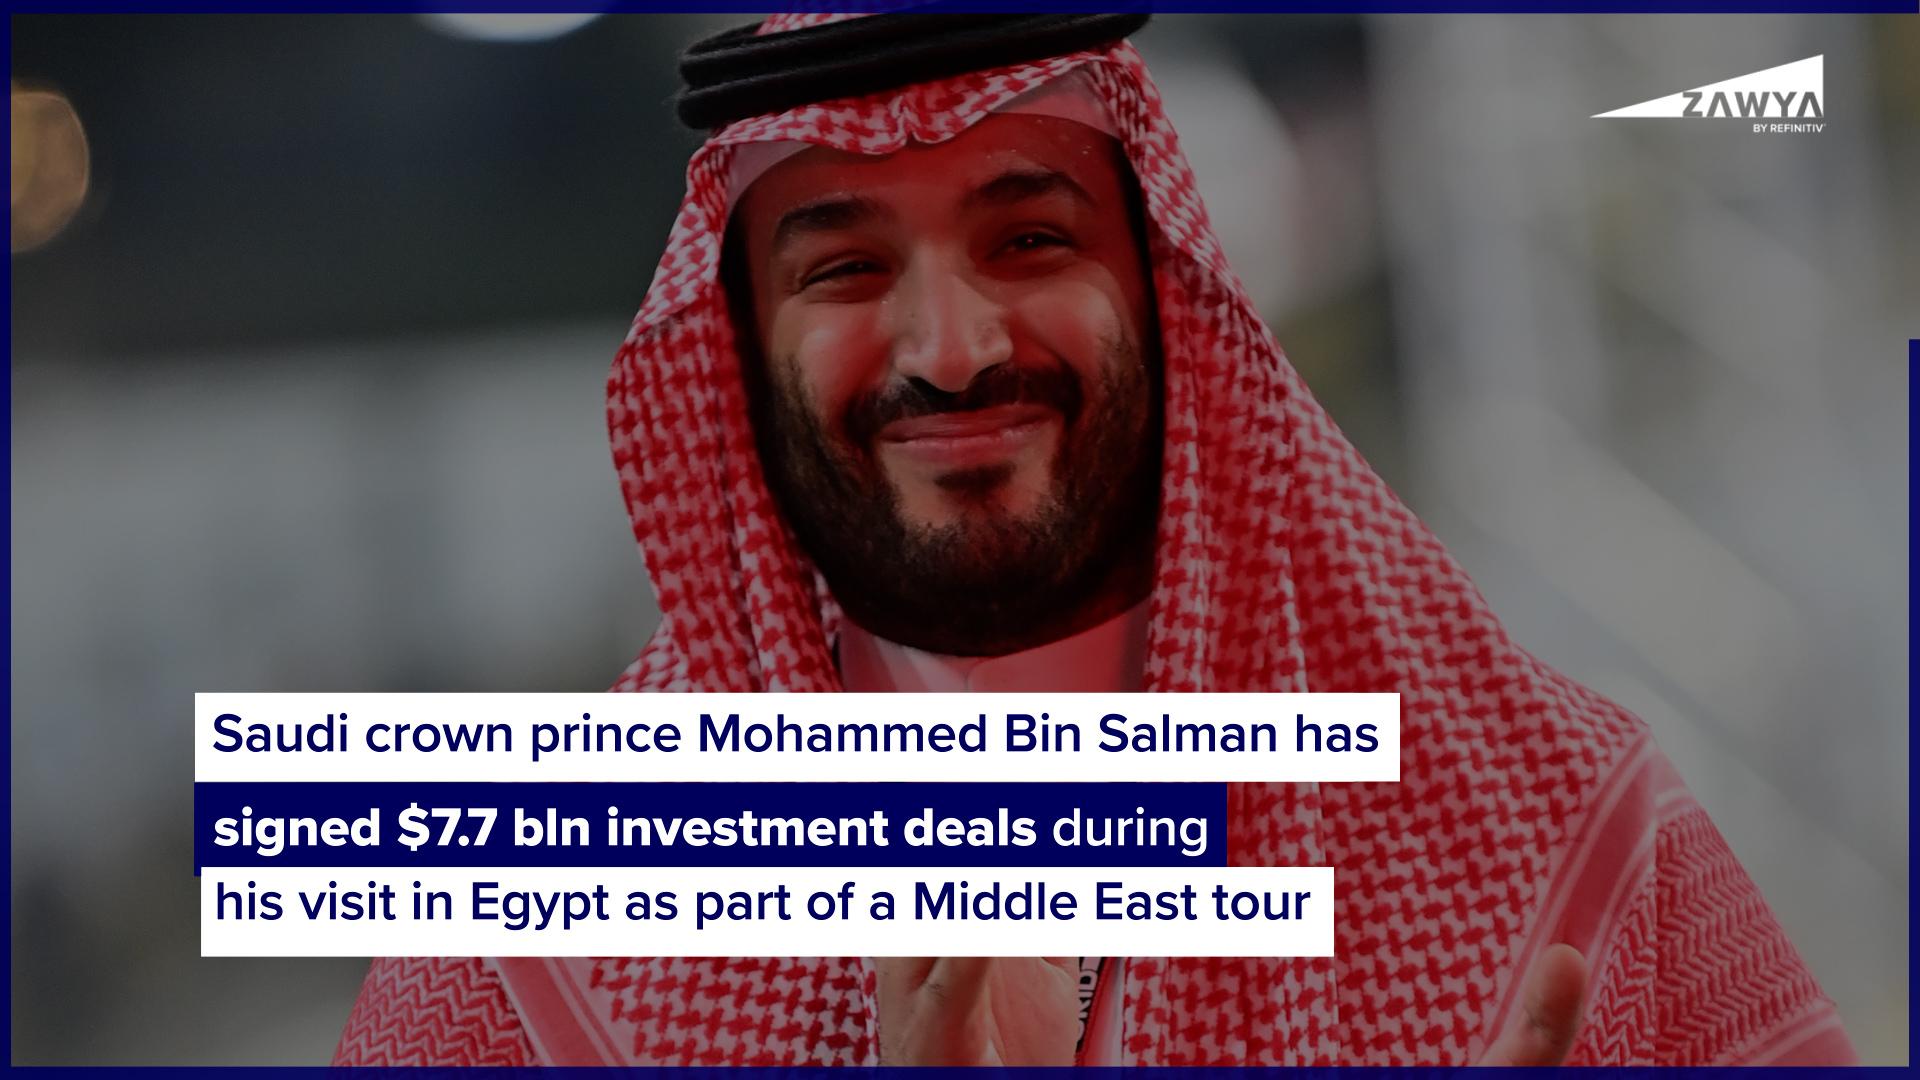 Saudi, Egypt sign $7.7bln deals as crown prince visits Cairo